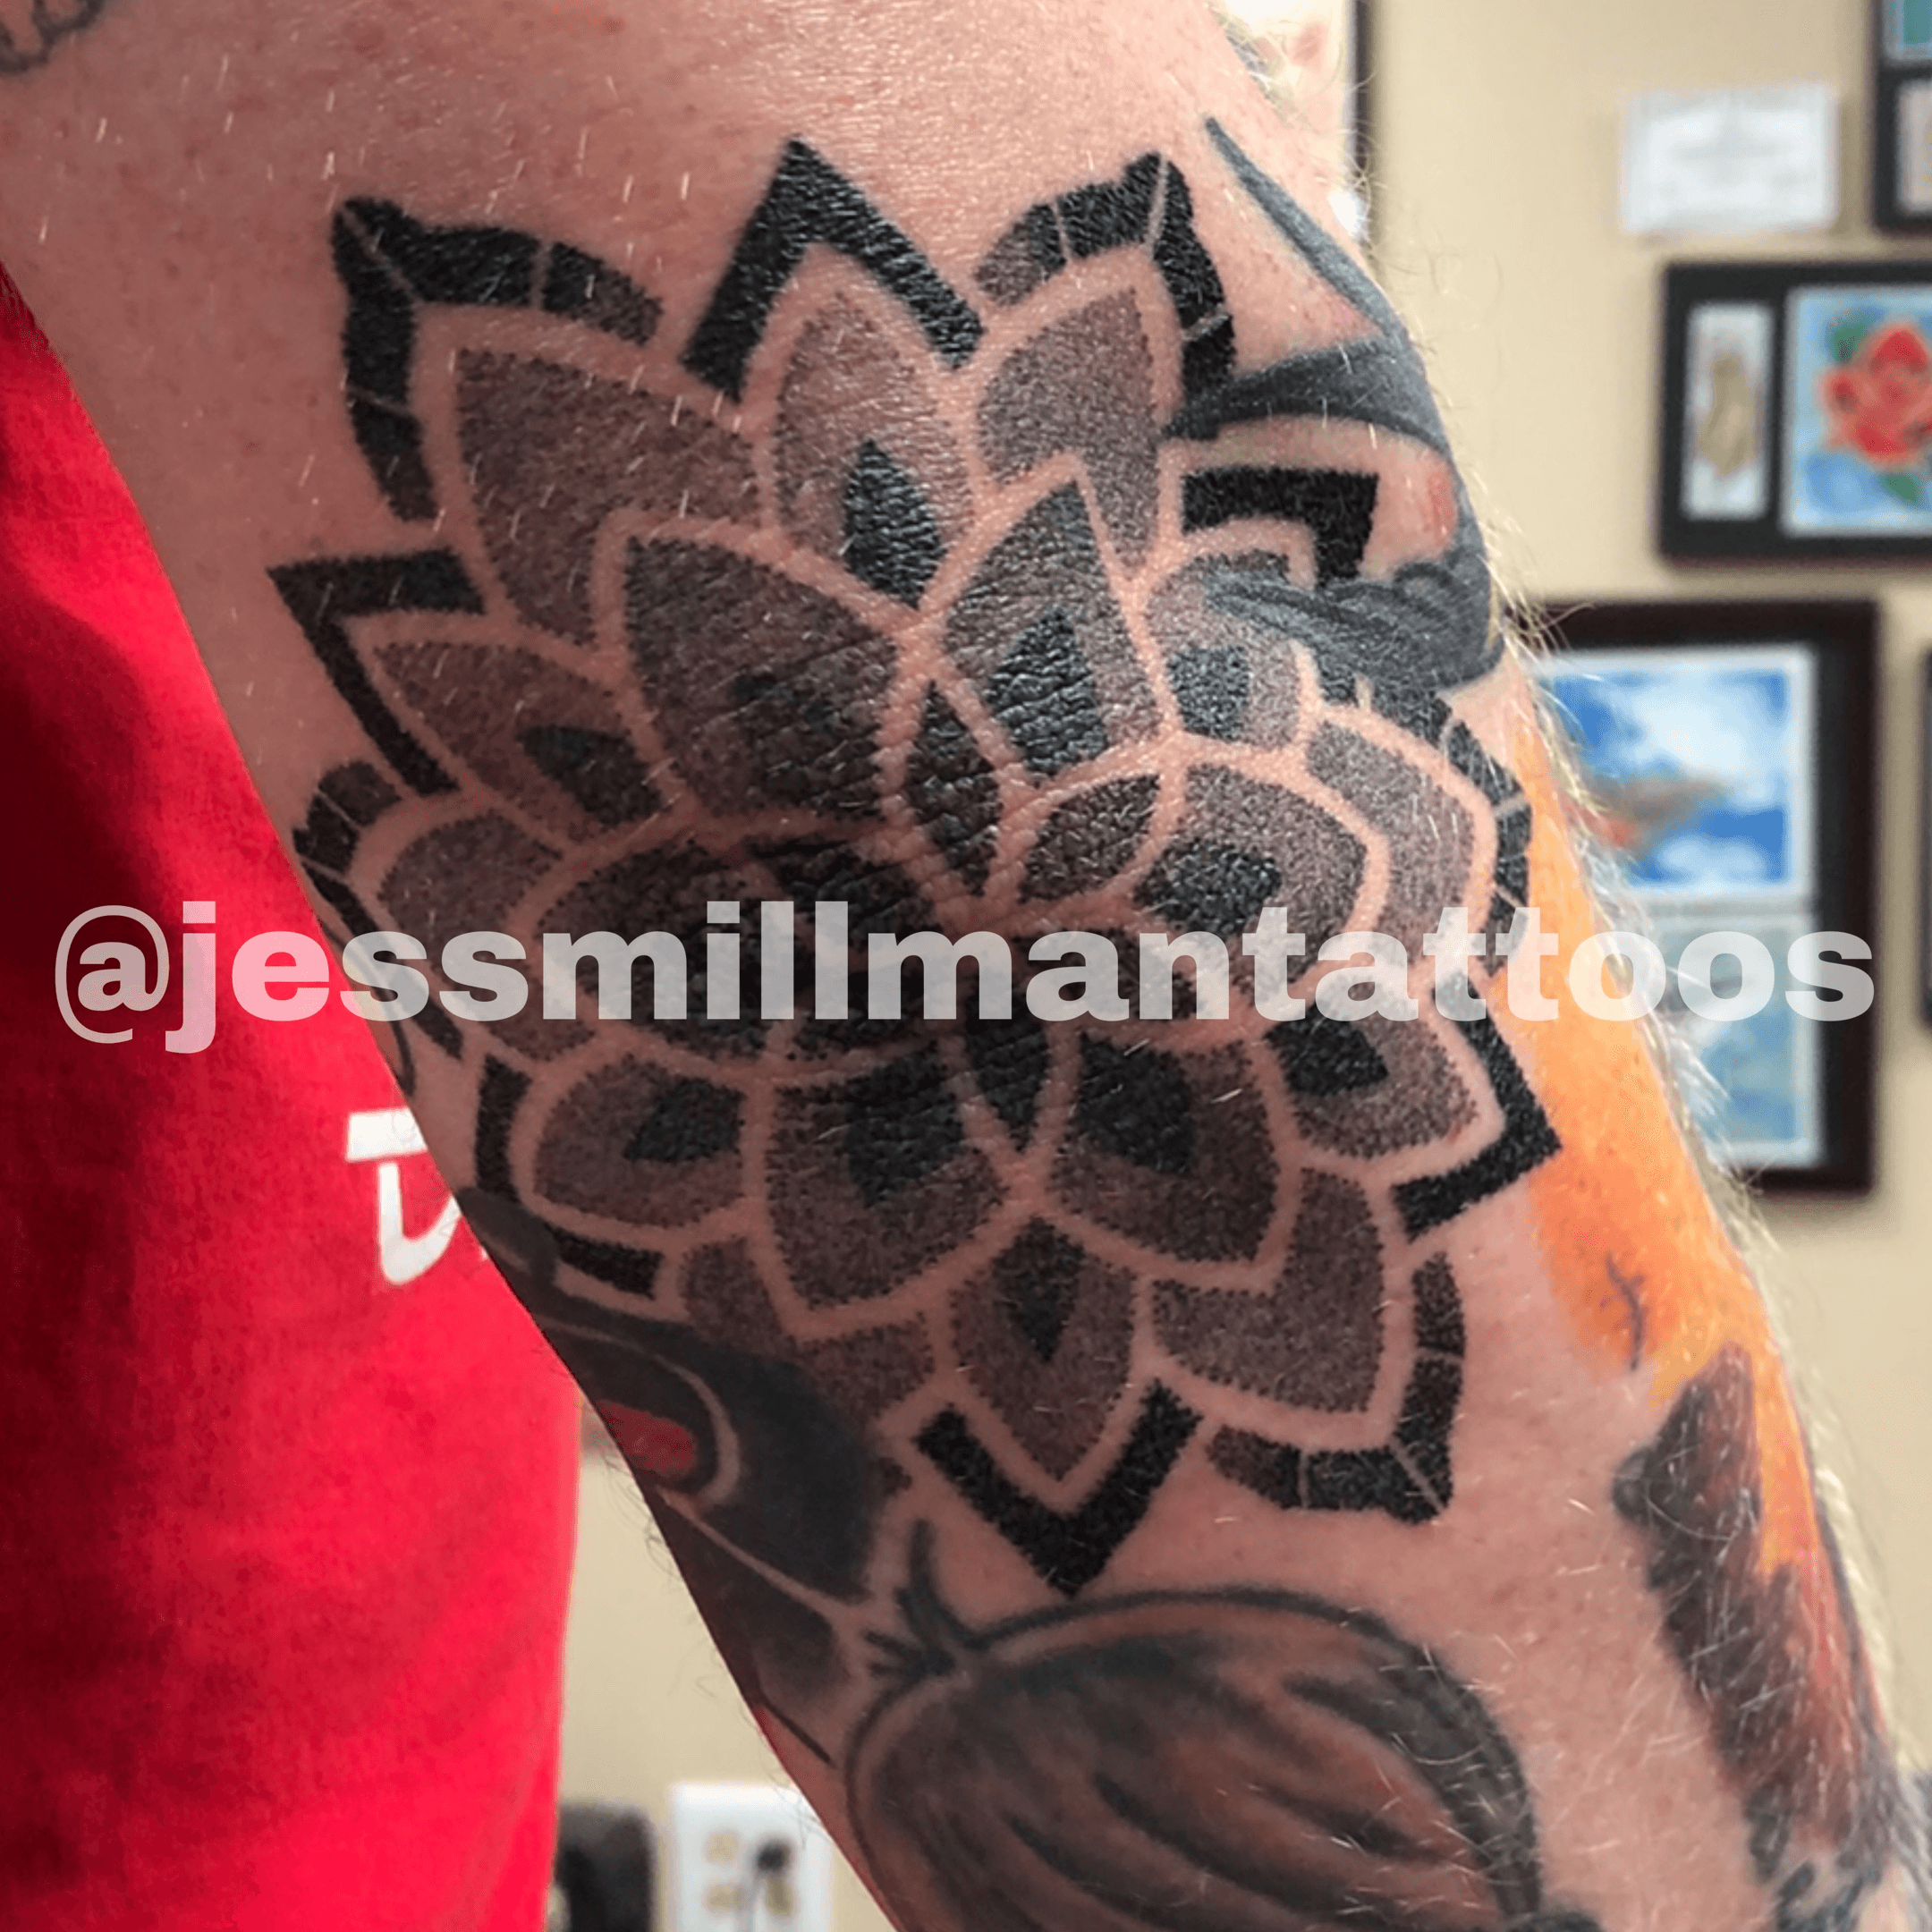 Elbow tattoos  Best Tattoo Ideas Gallery